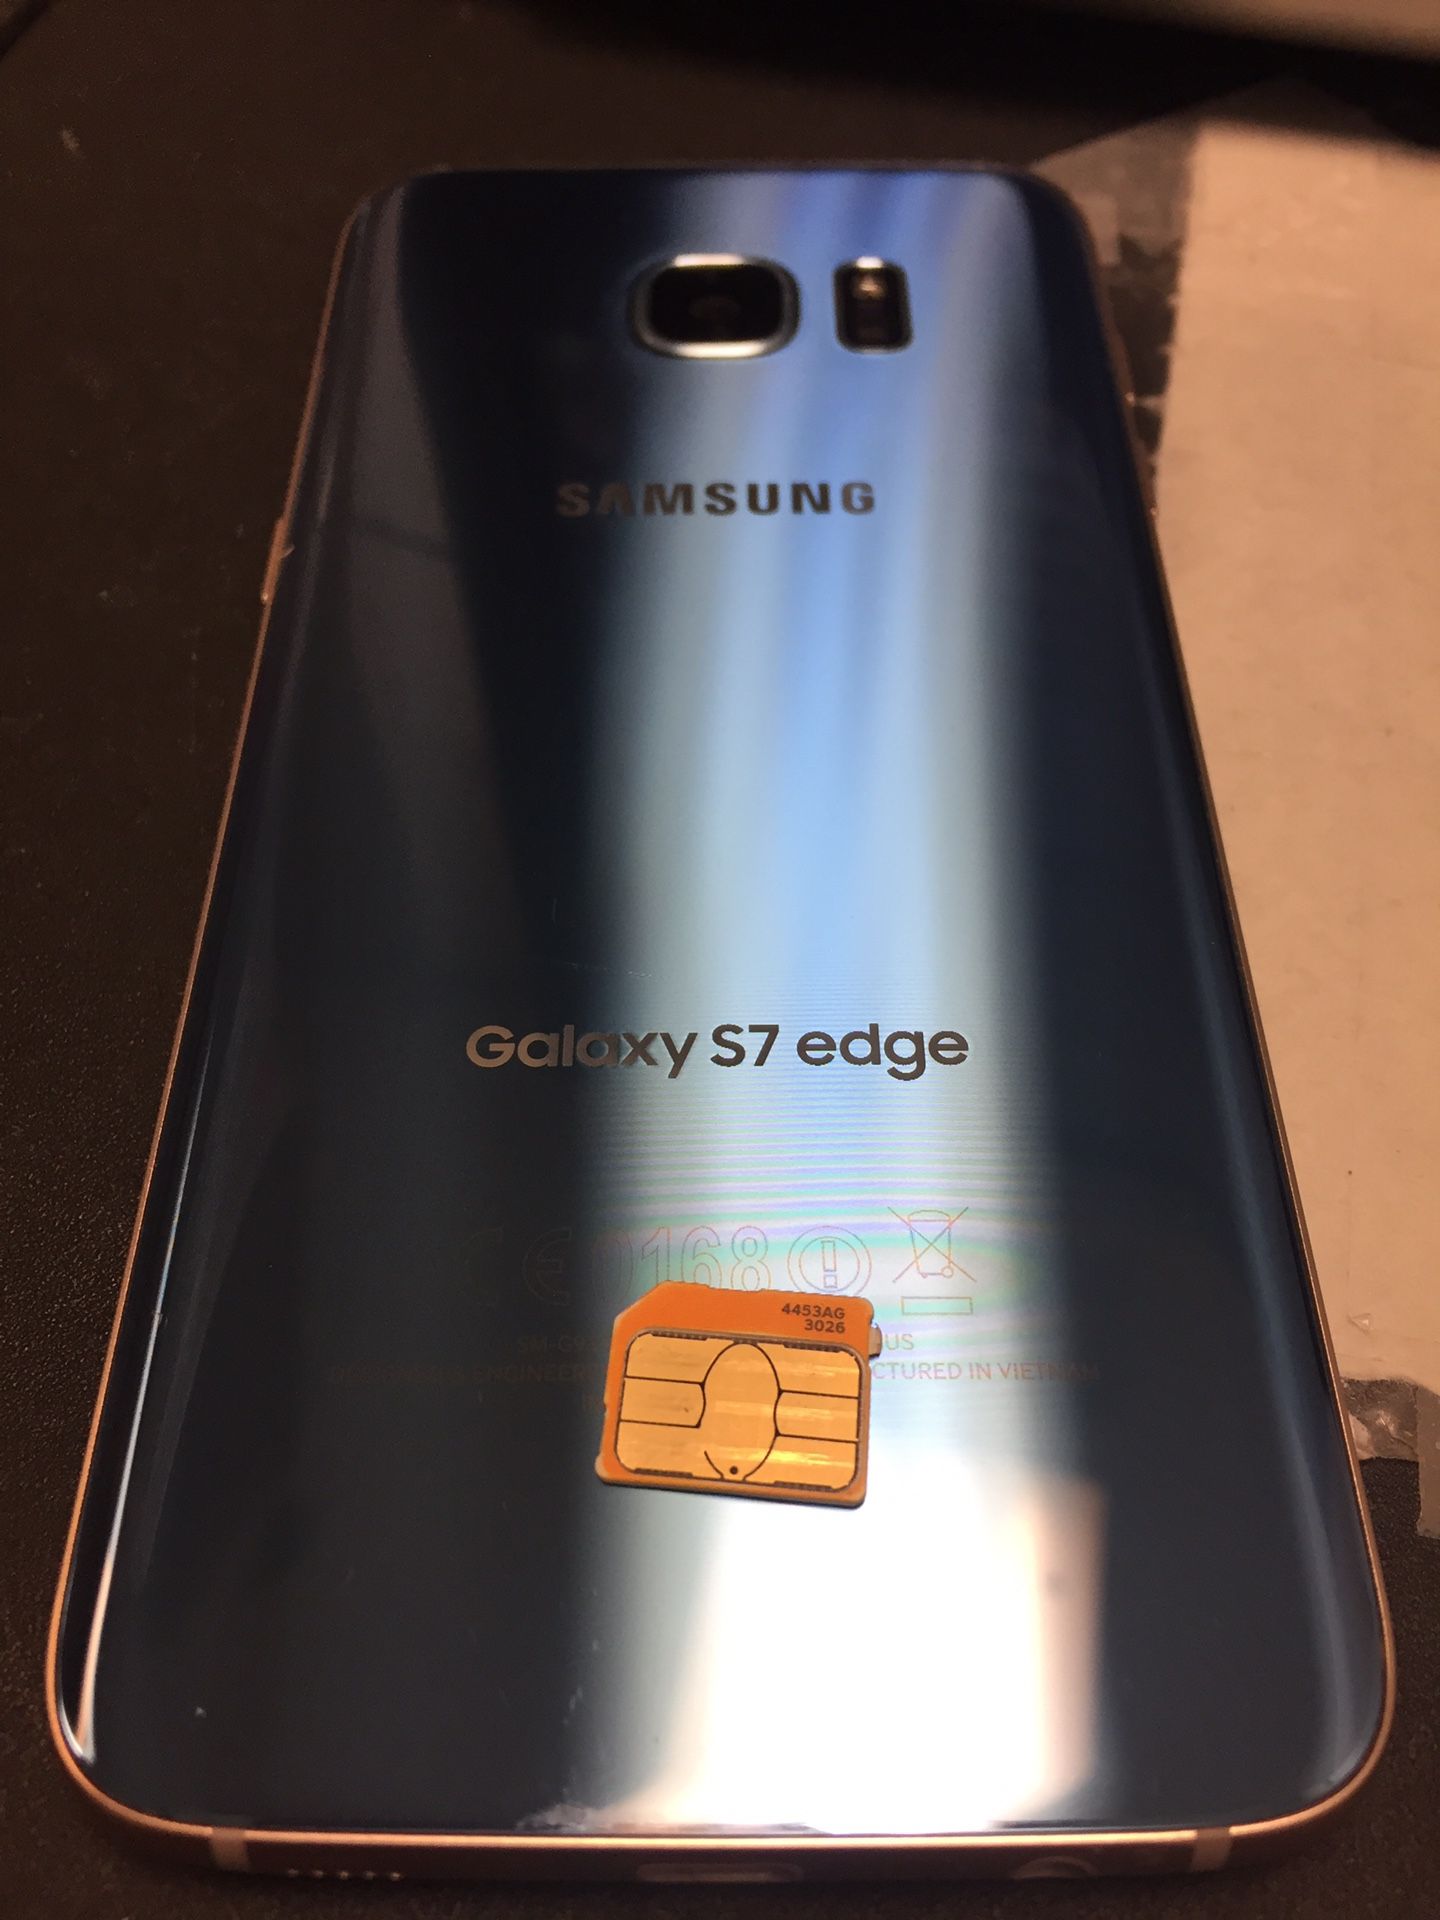 Samsung Galaxy S7 edge unlocked